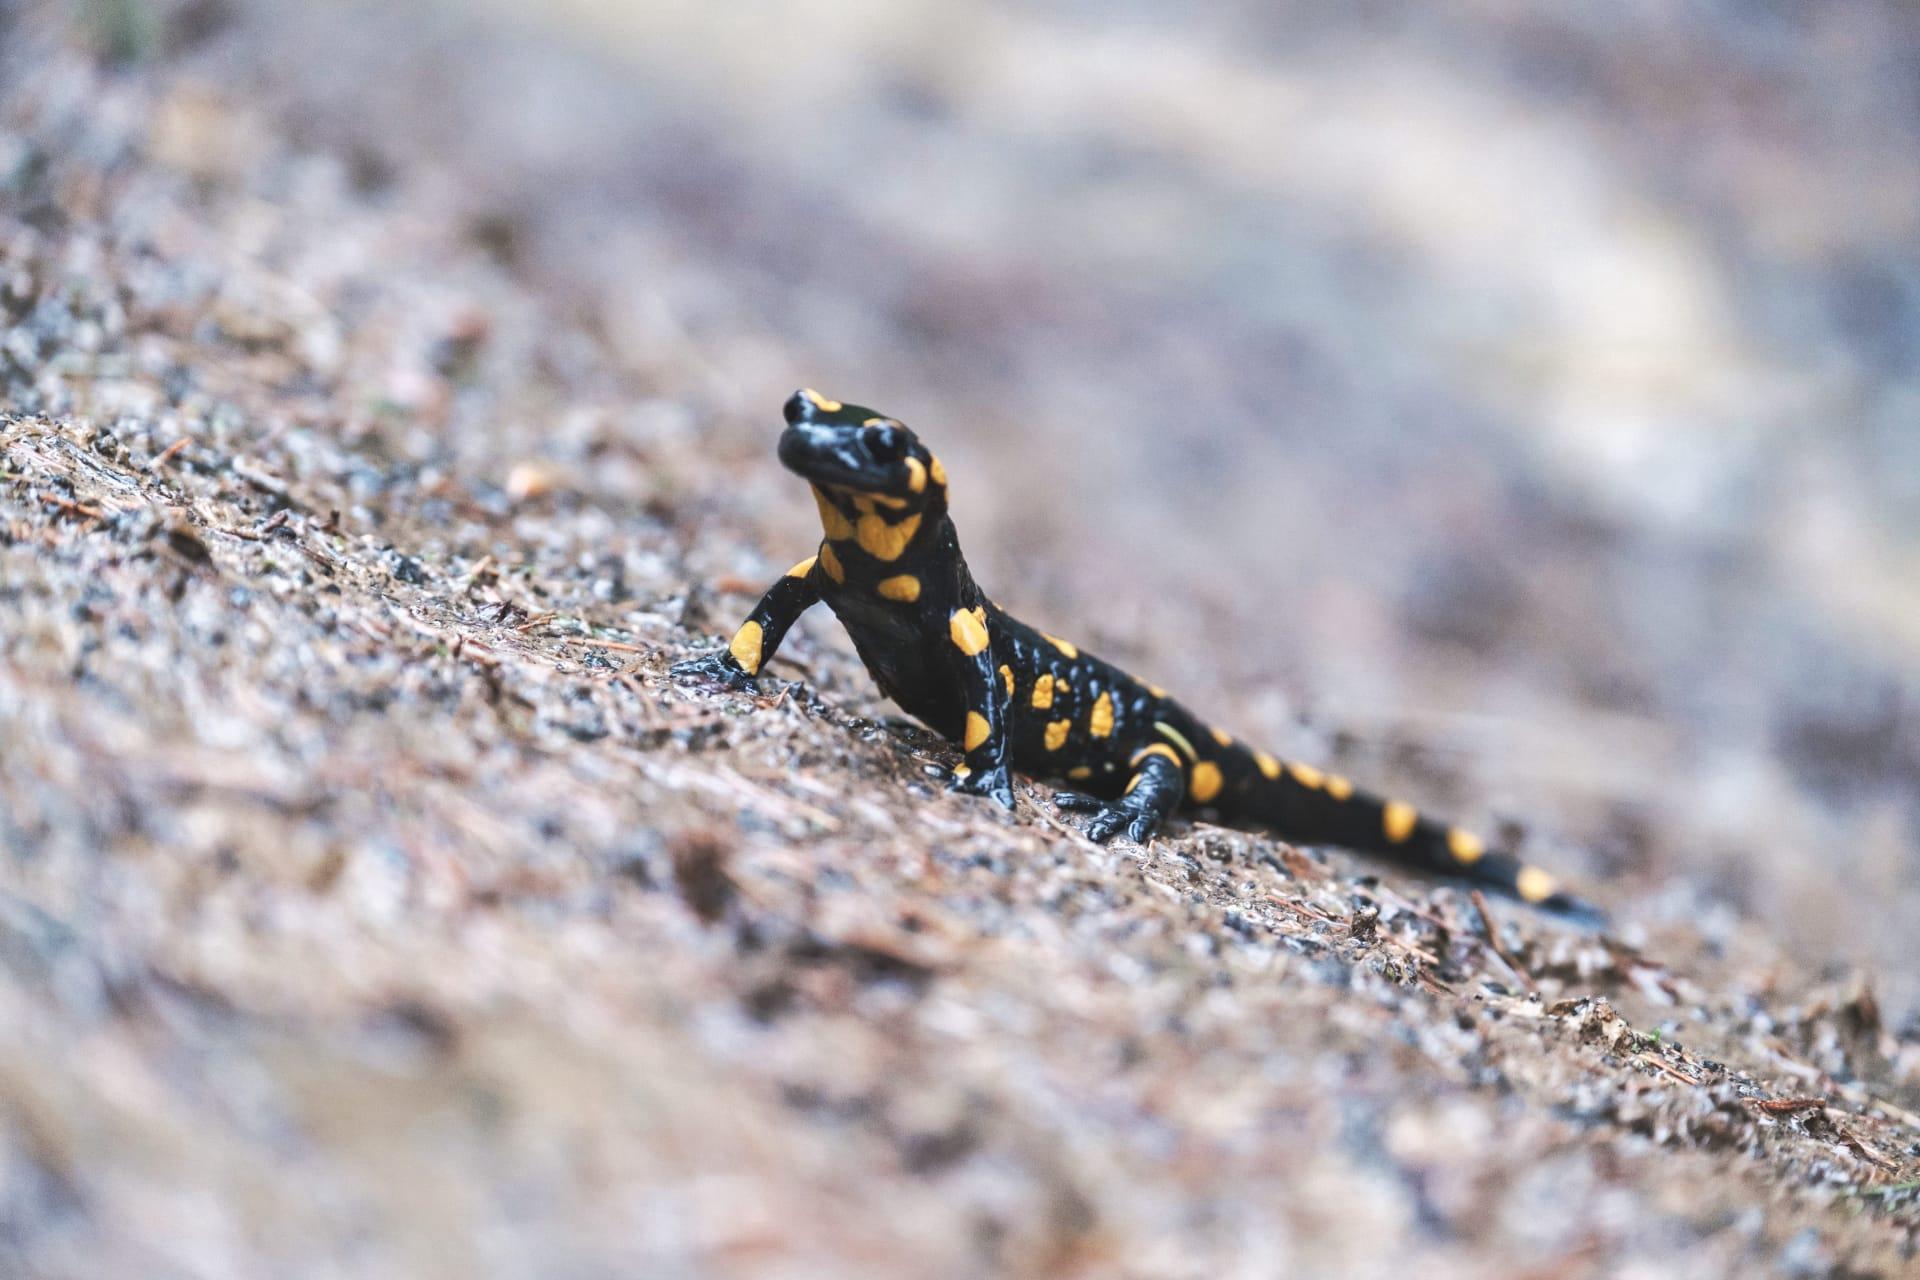 Salamander pictures